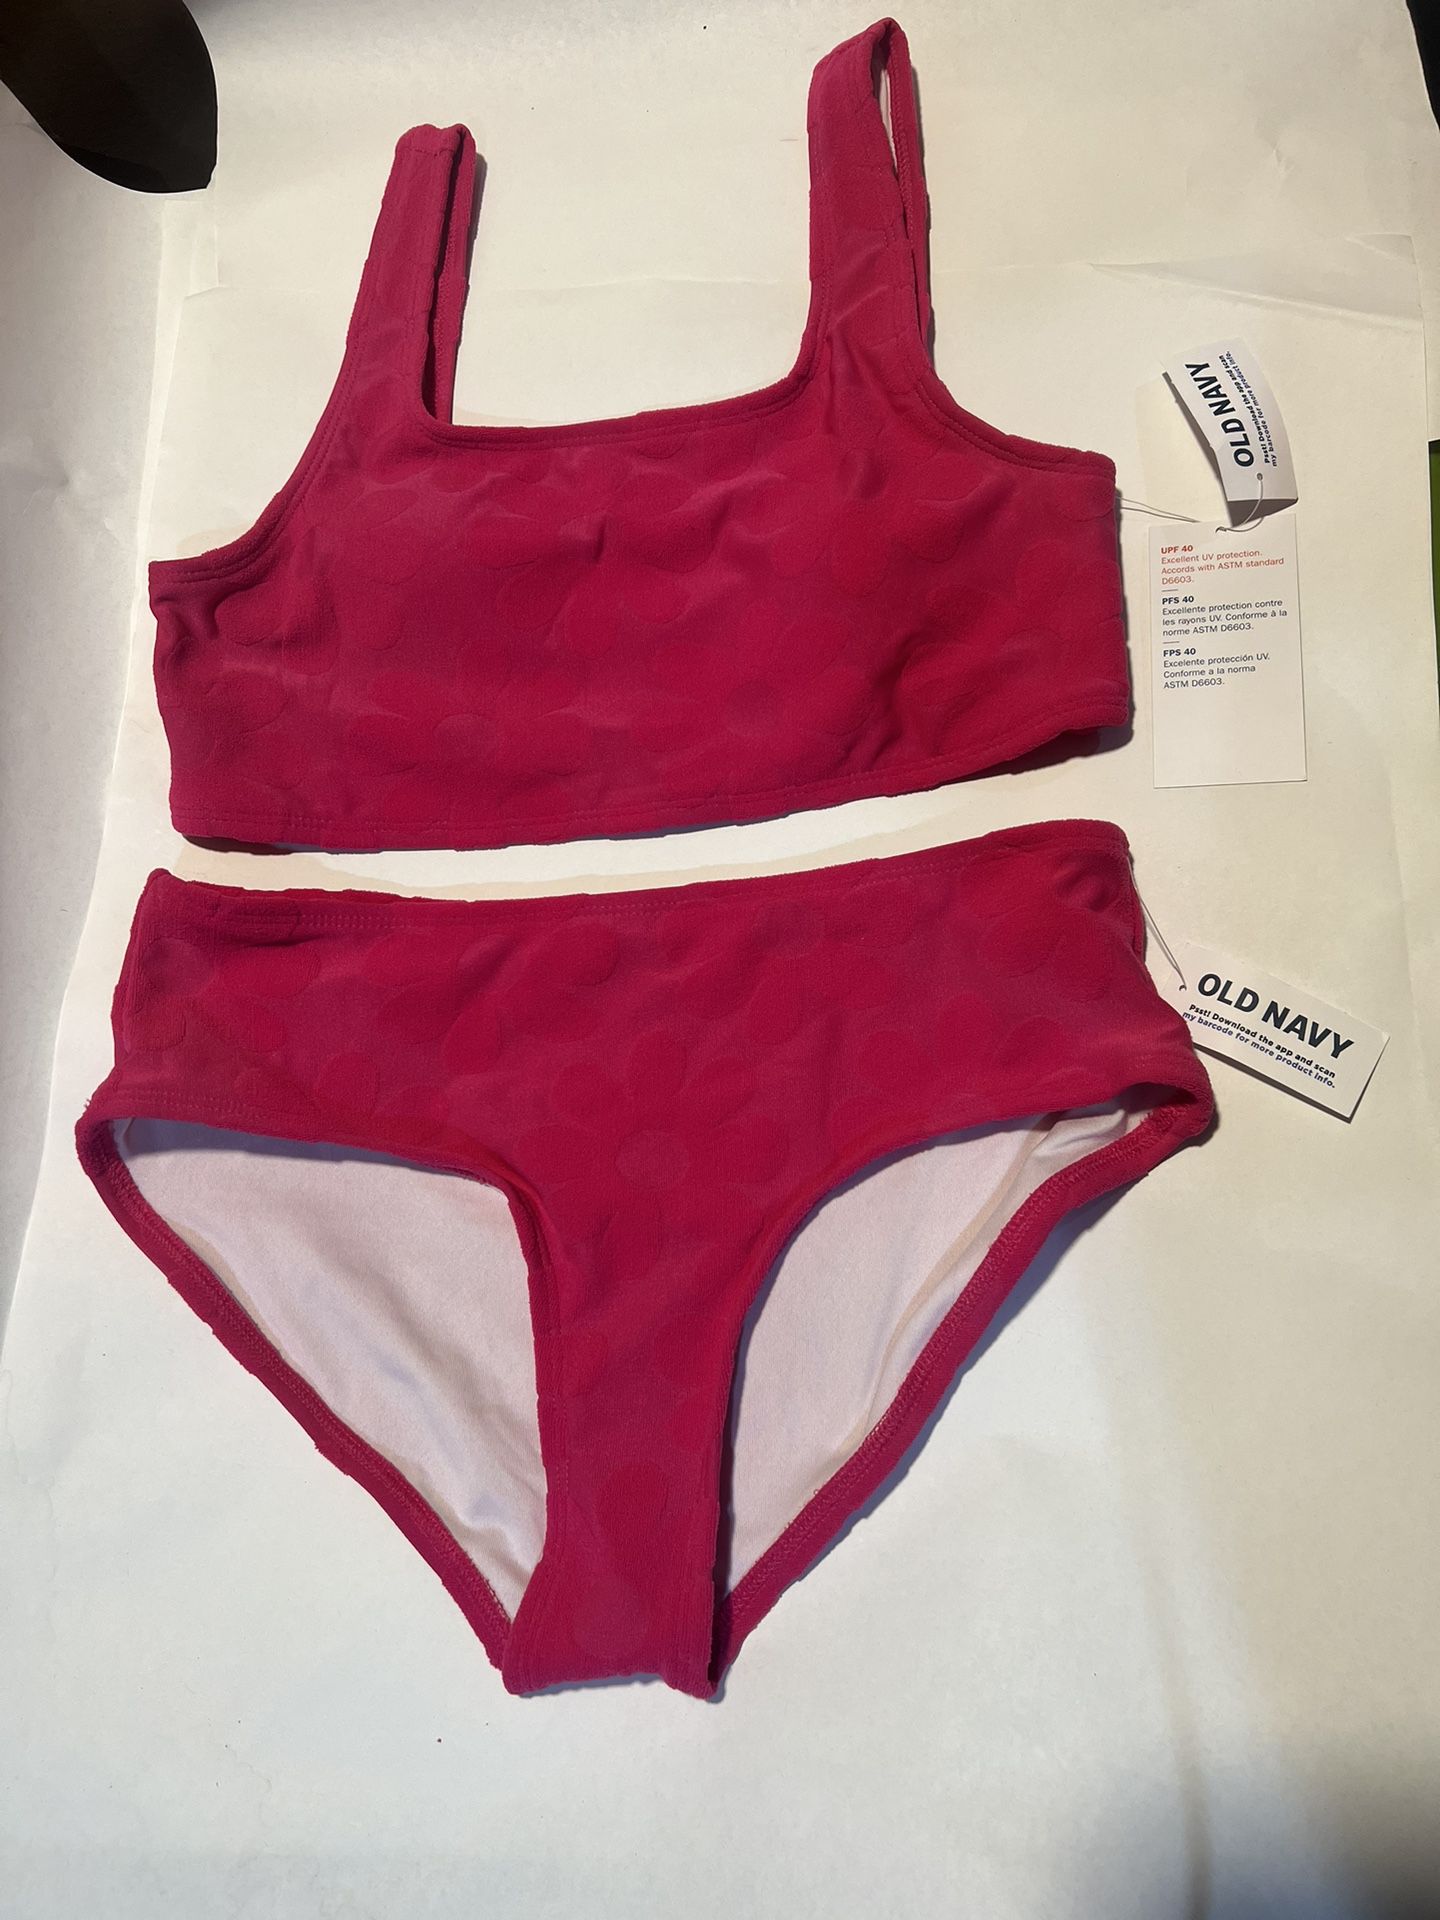 XL (14-16) Textured Floral-Terry Bikini Swim Set for Girls